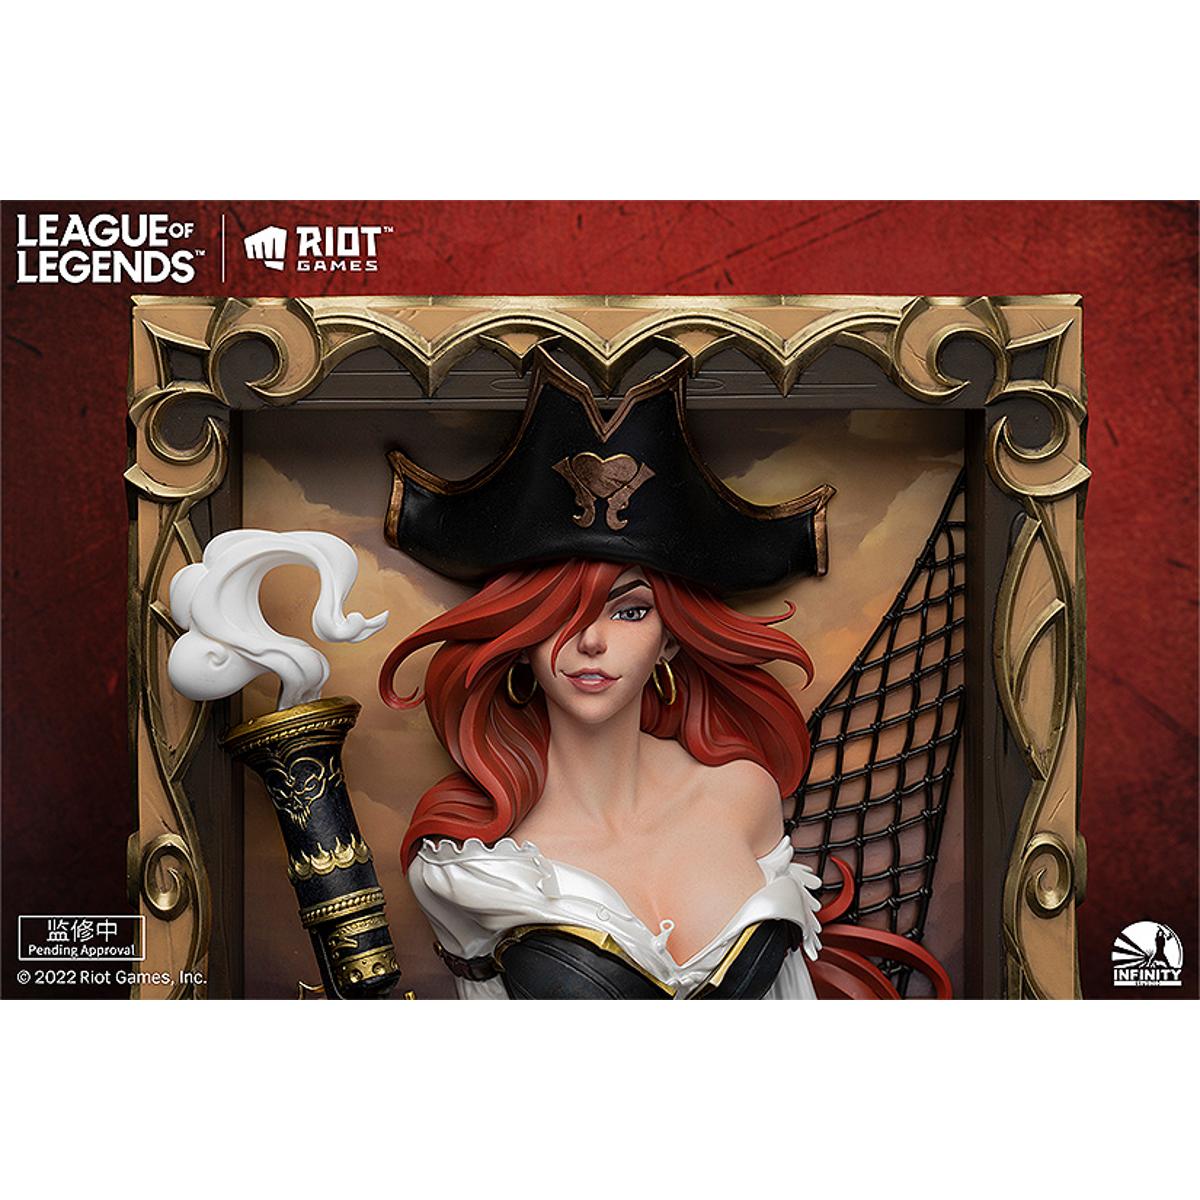 Infinity Studio - League of Legends - Miss Fortune - The Bounty Hunter 1/6  statue - Figurine Collector EURL